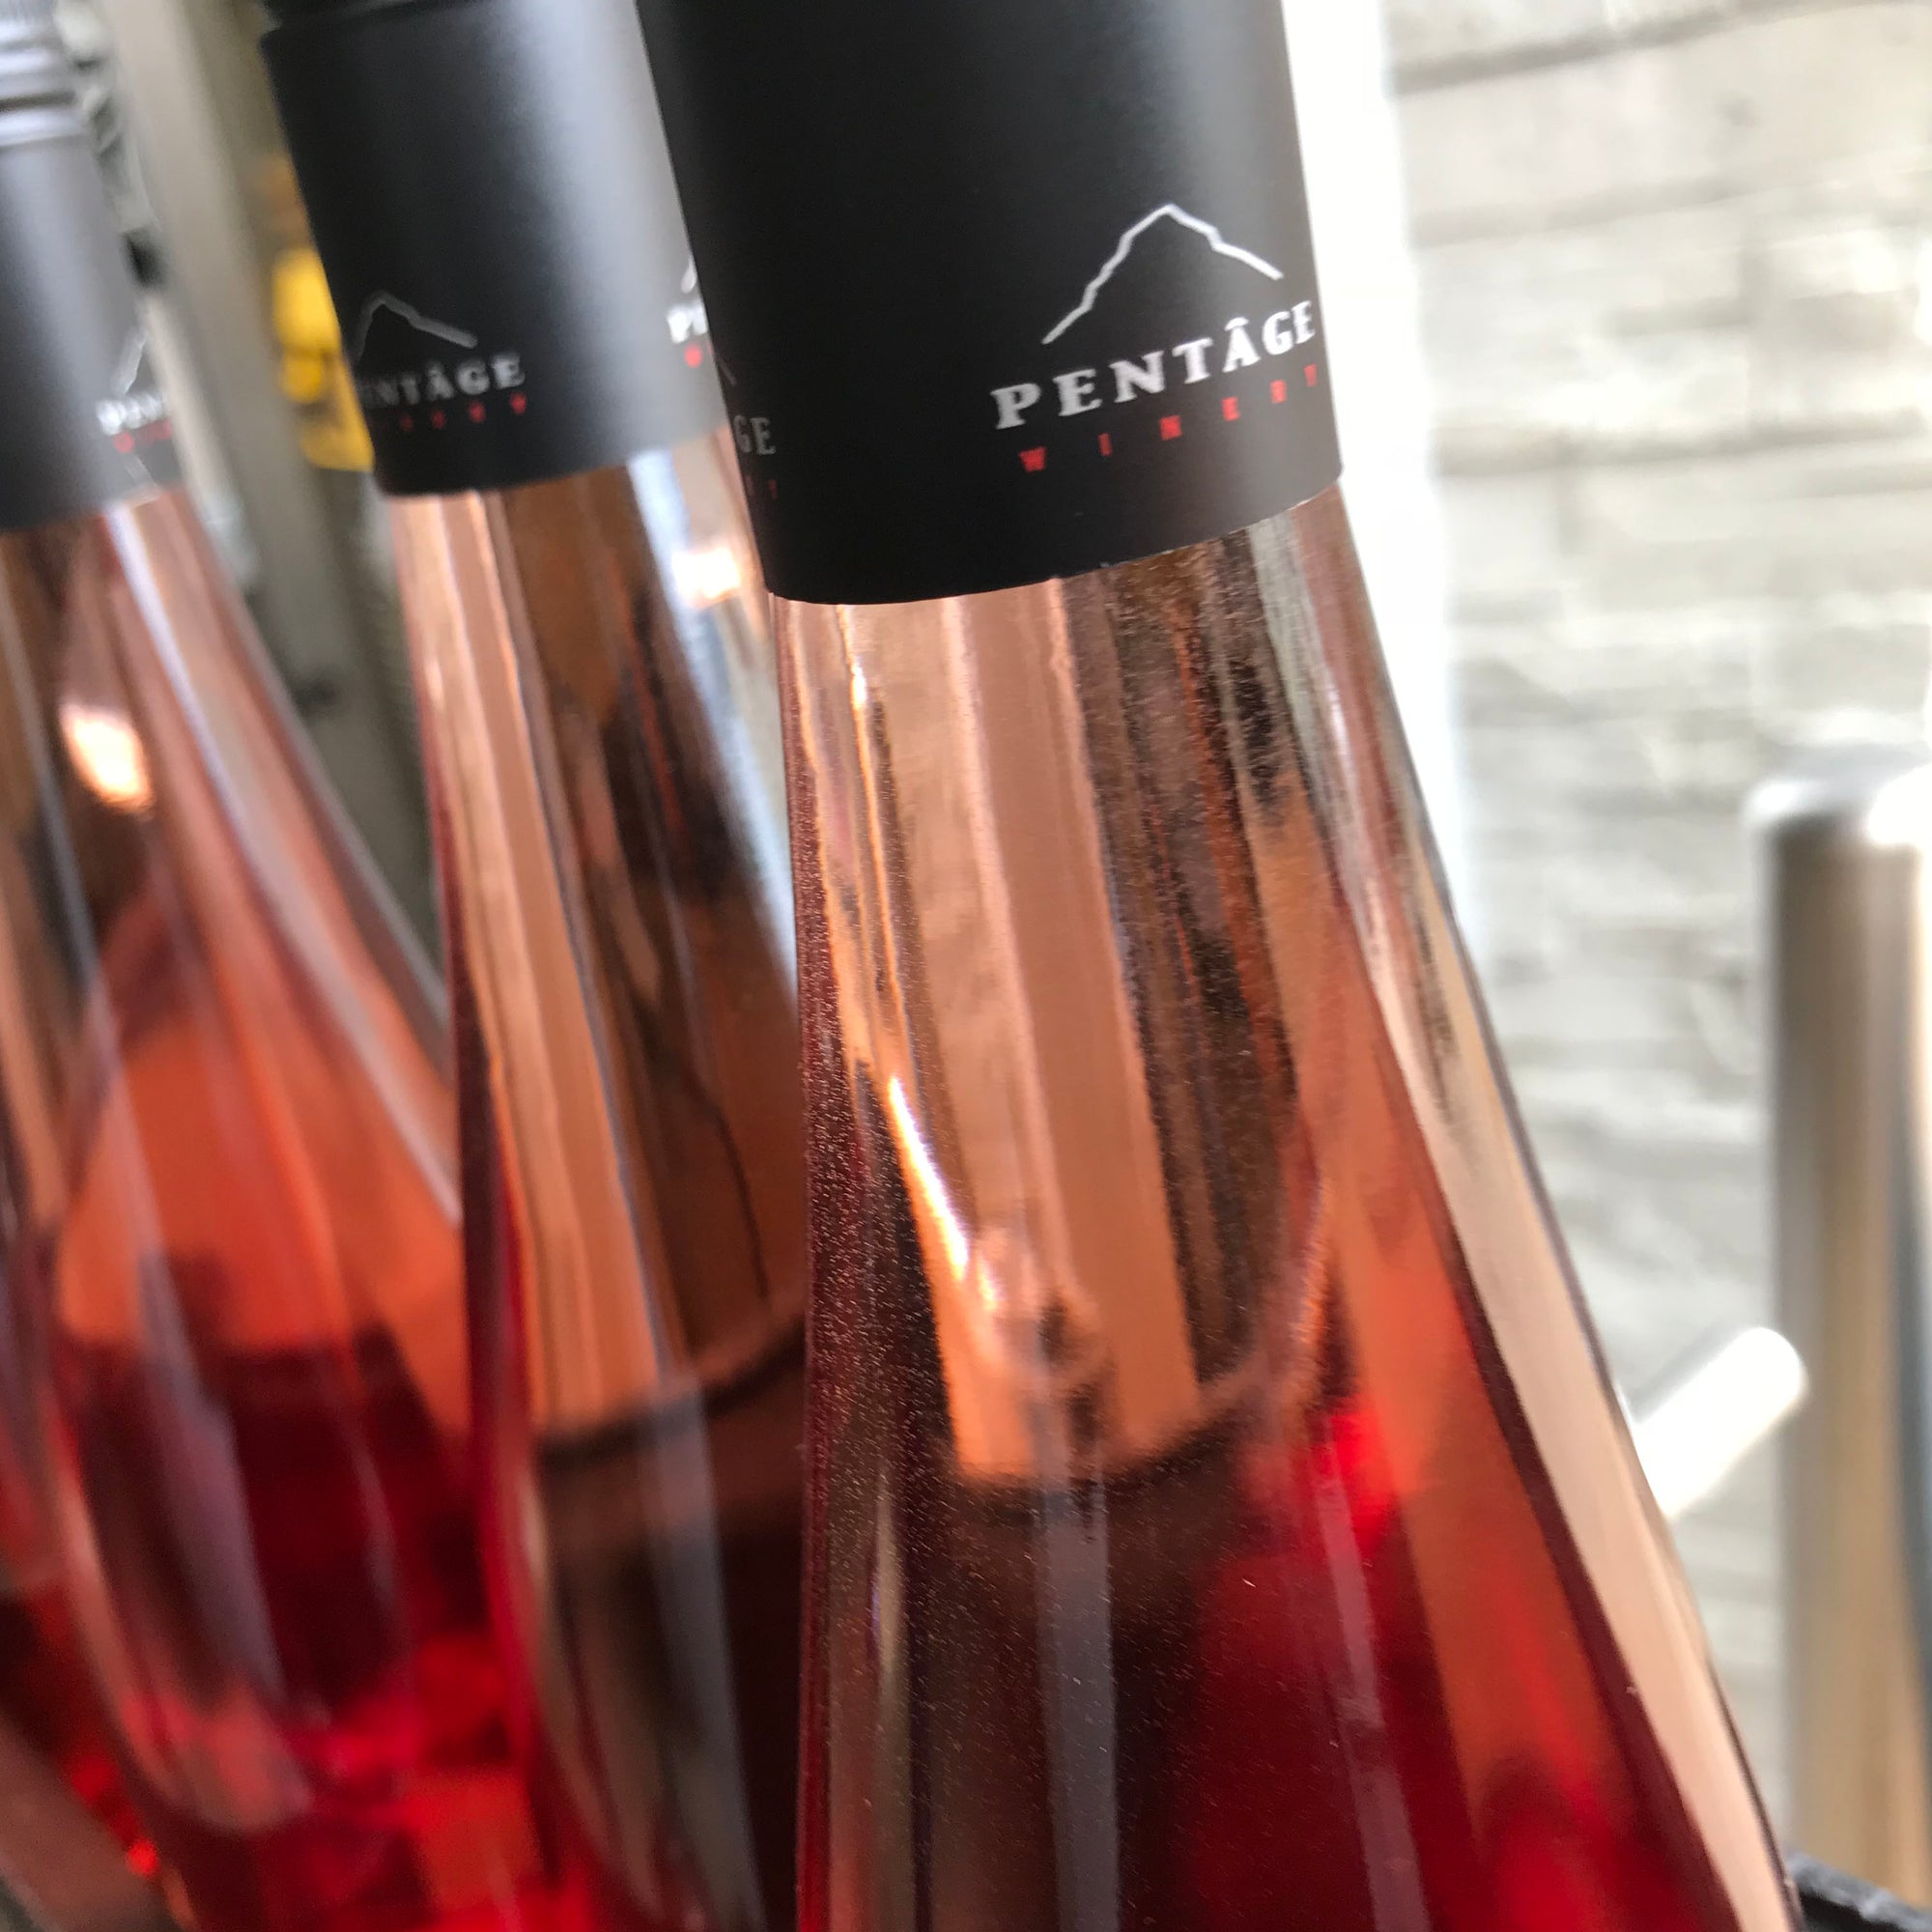 Rose bottles at Pentâge Winery